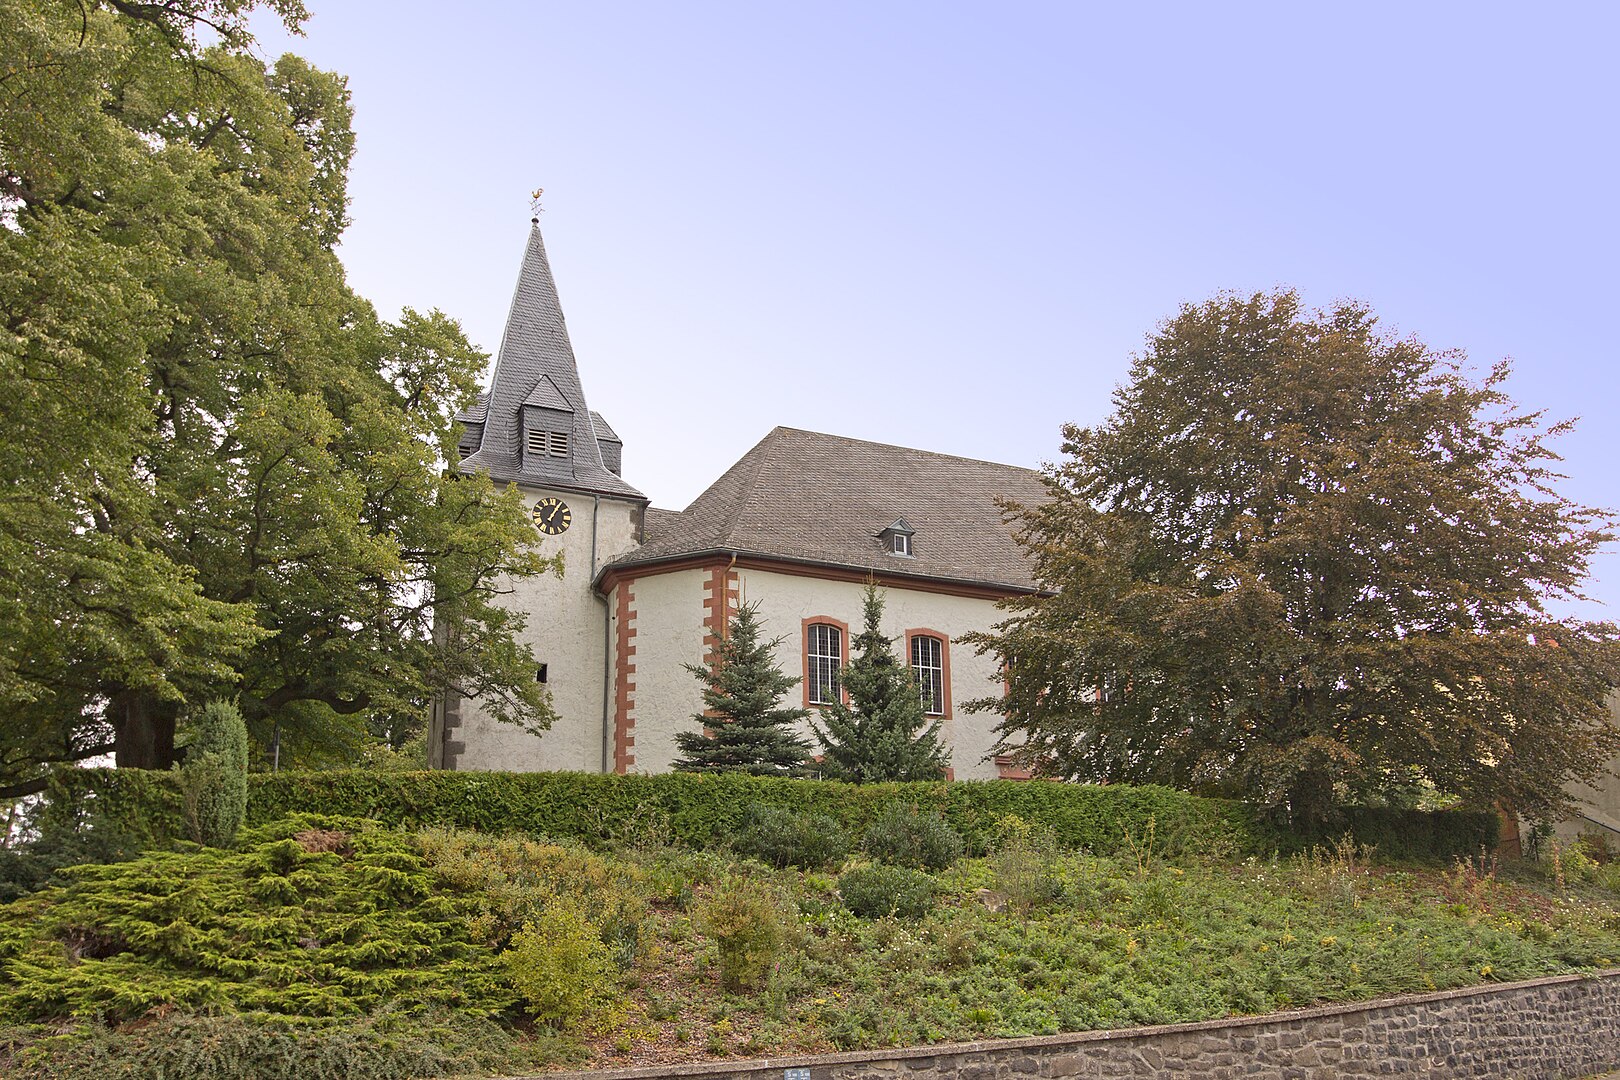 Church in Bobenhausen II